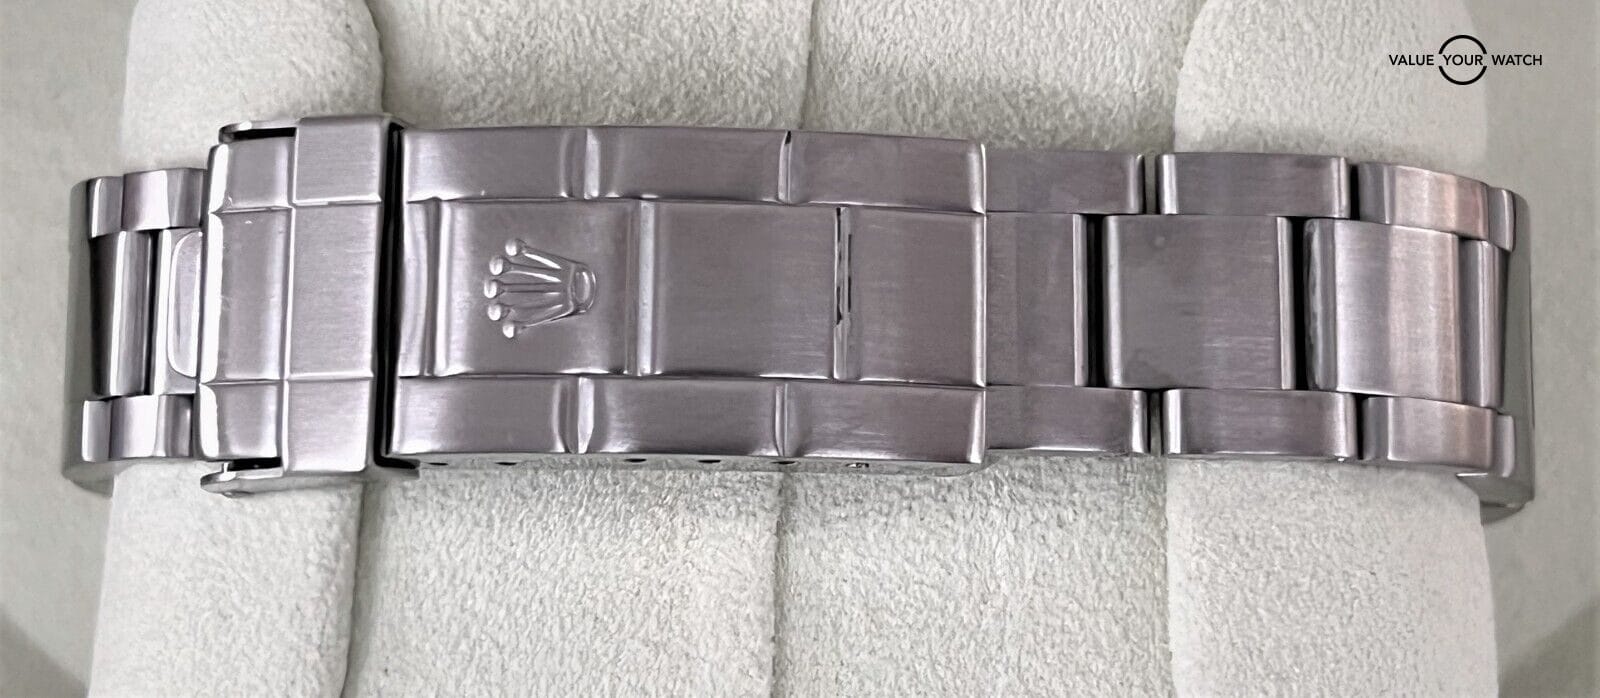 Rolex Kermit Submariner 16610LV Automatic Chronometer Black Dial Men's  Watch - Luxury Watches USA